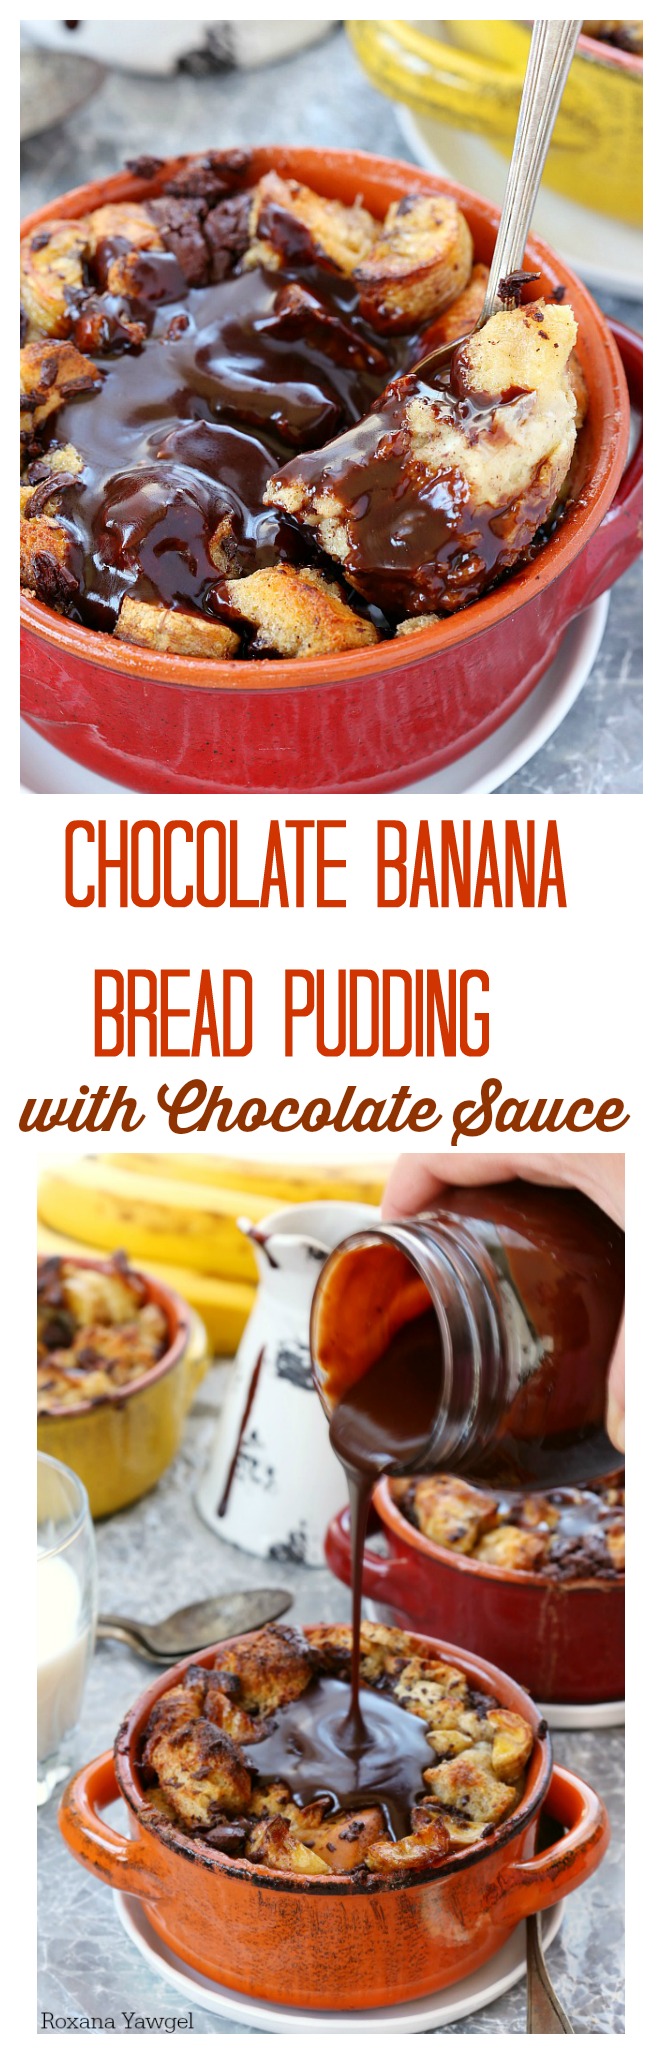 Chocolate Banana Bread Pudding with Chocolate Sauce Recipe